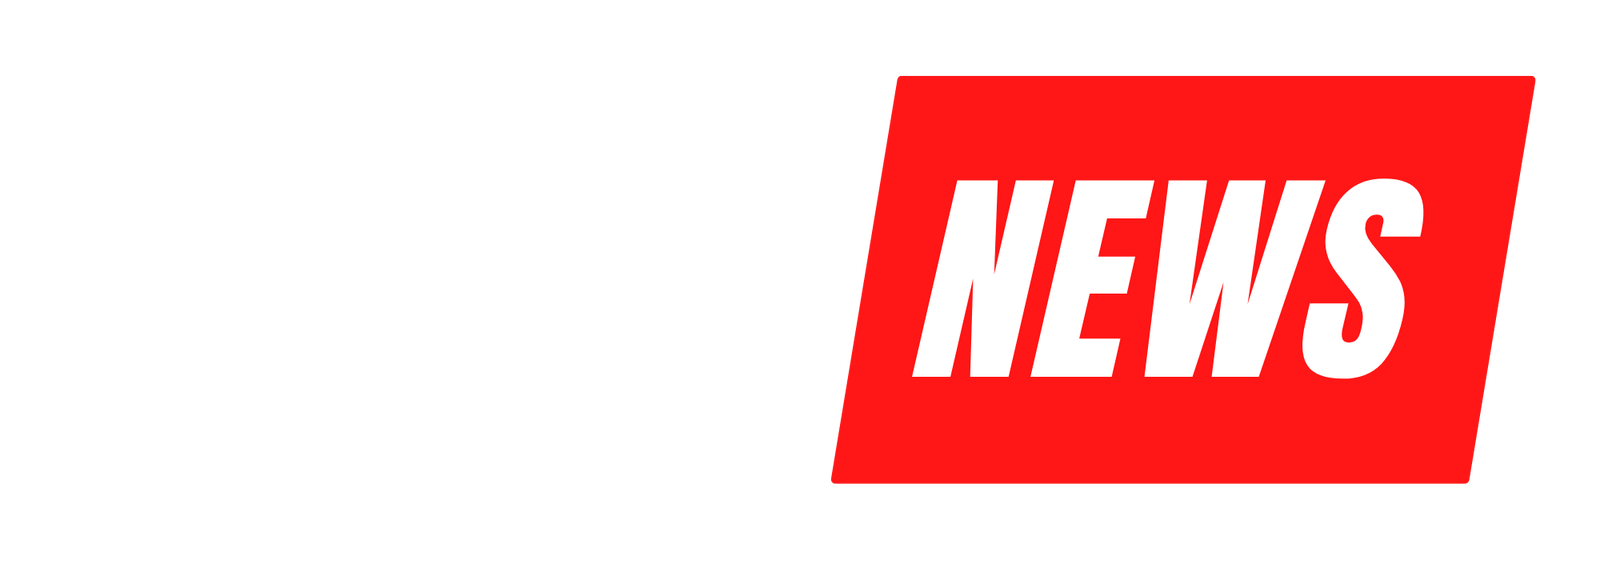 indic-news-logo